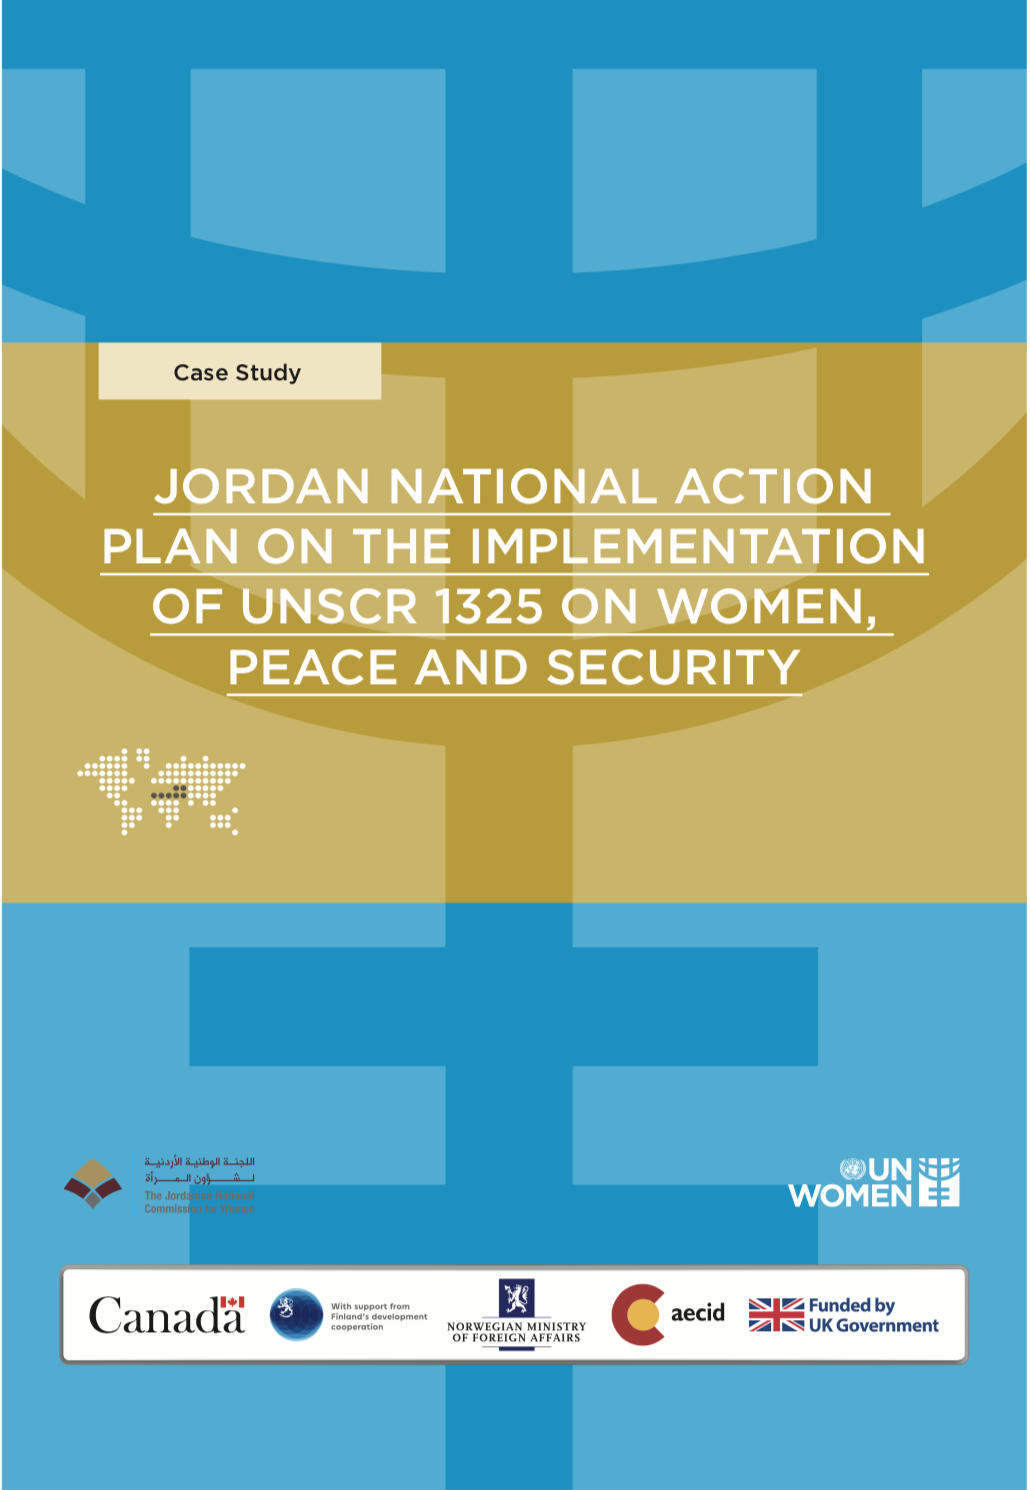 JONAP Case Study, developed by the Jordanian National Commission for Women and UN Women in Jordan. 